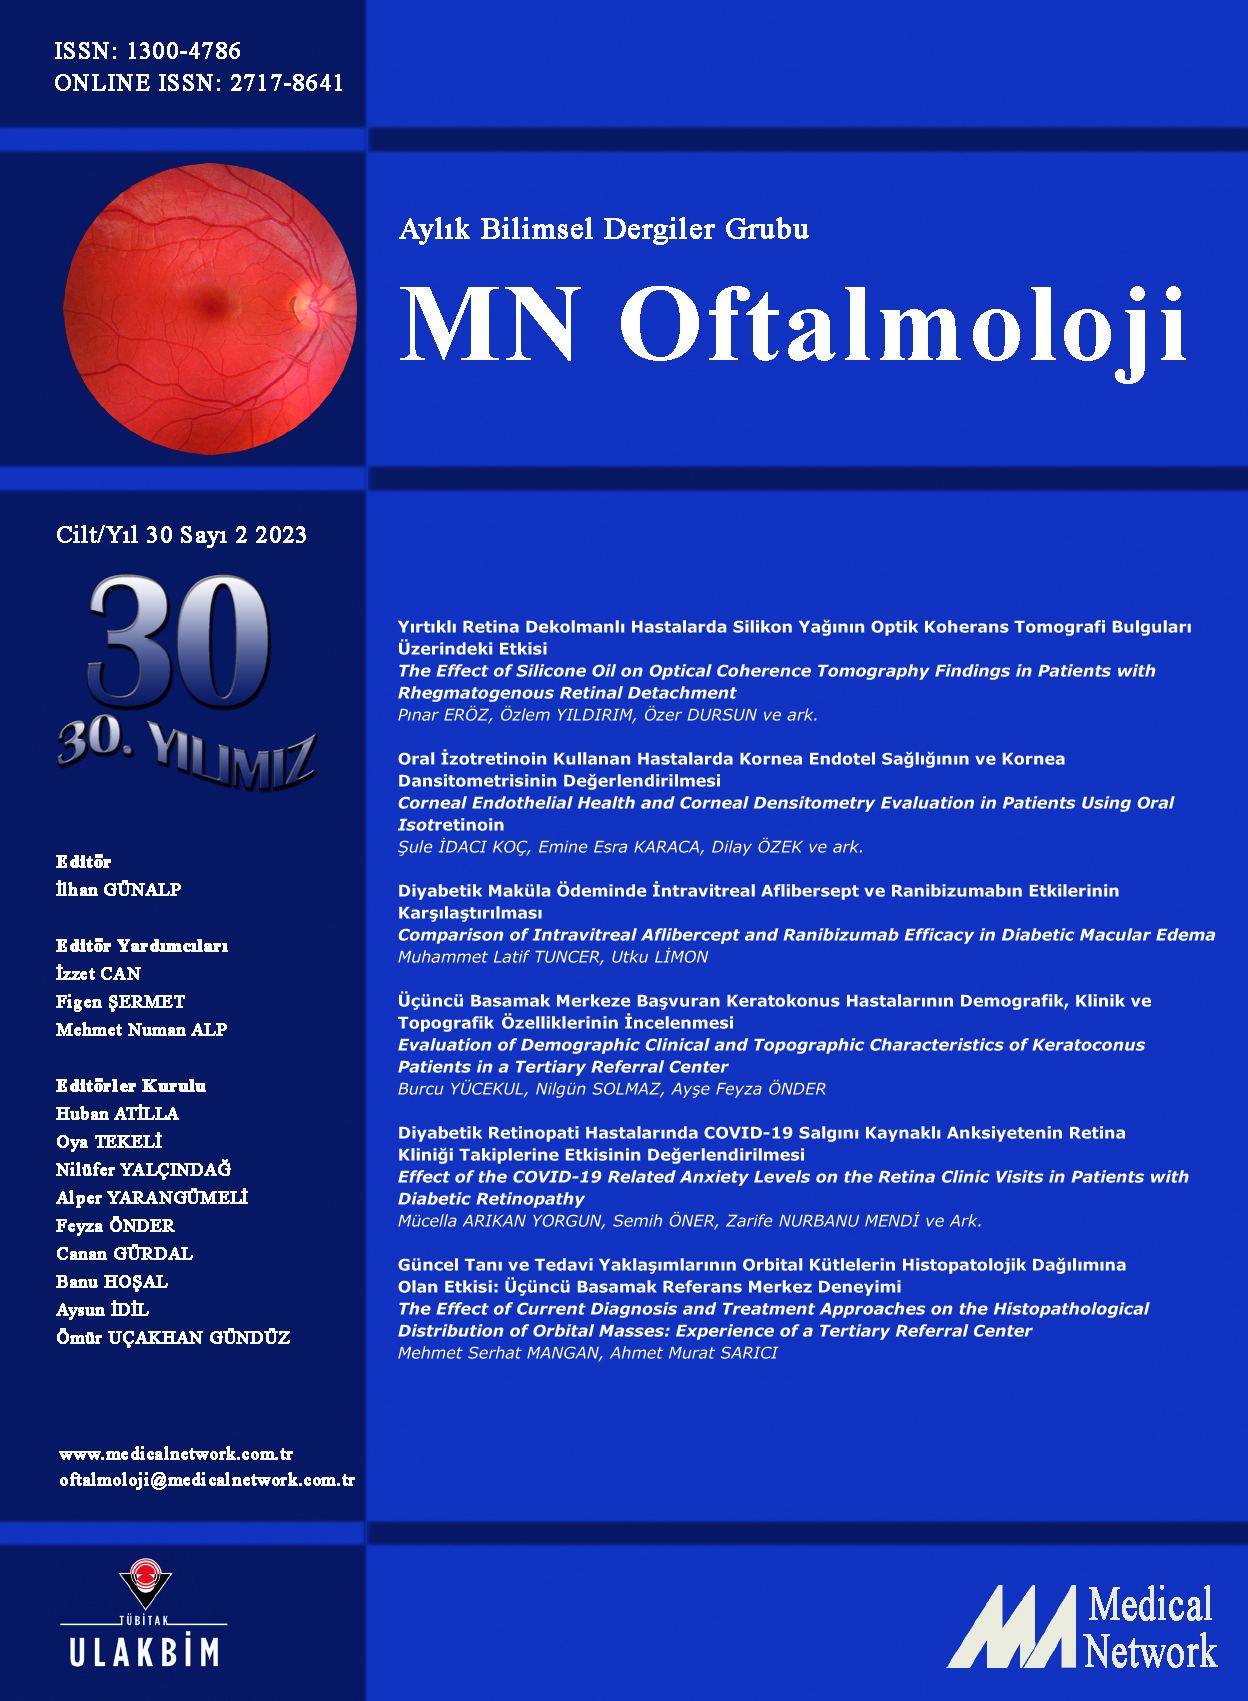 <p>MN Oftalmoloji Cilt: 30 Say: 2 2023 (MN Ophthalmology Volume: 30 No: 2 2023)</p>